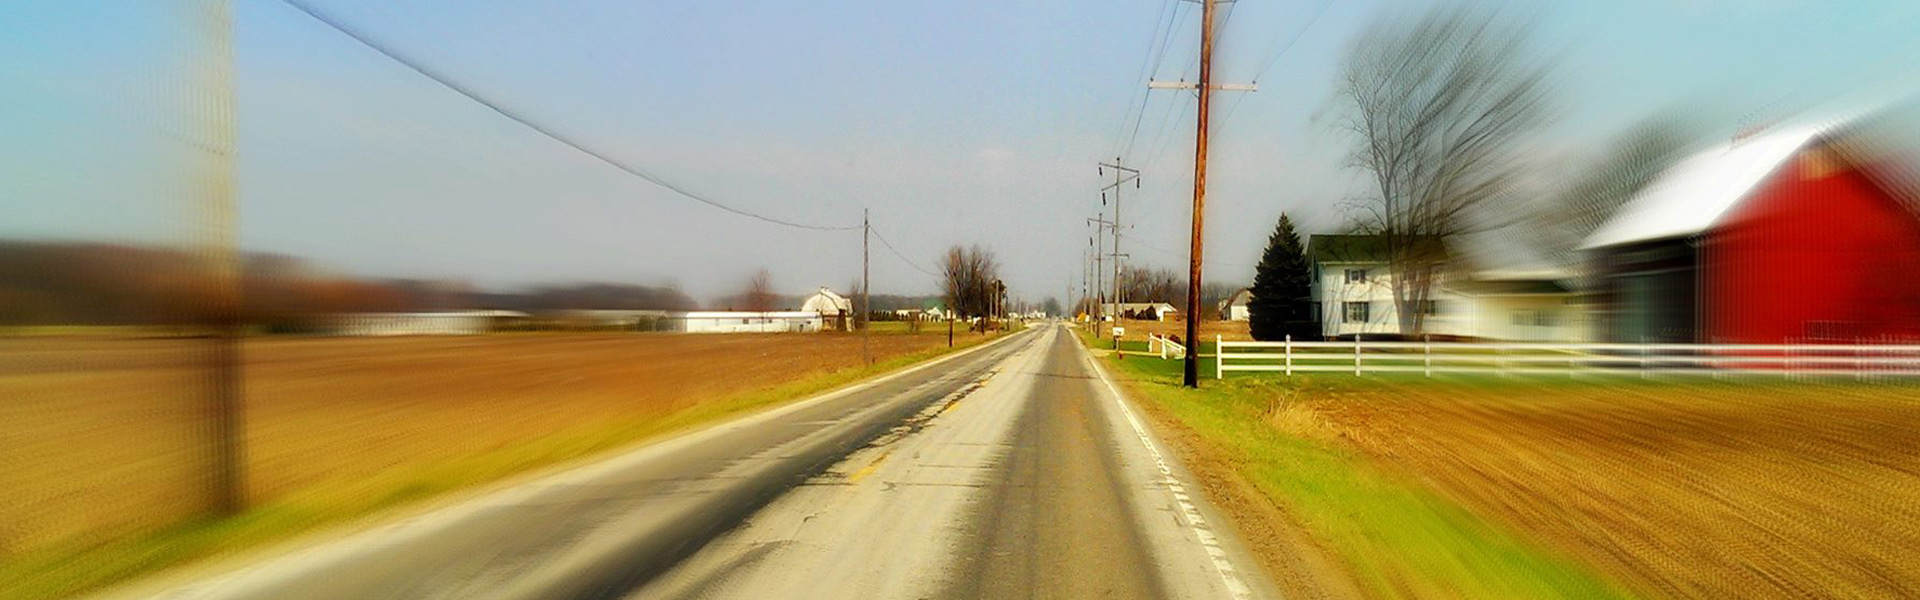 Indiana road